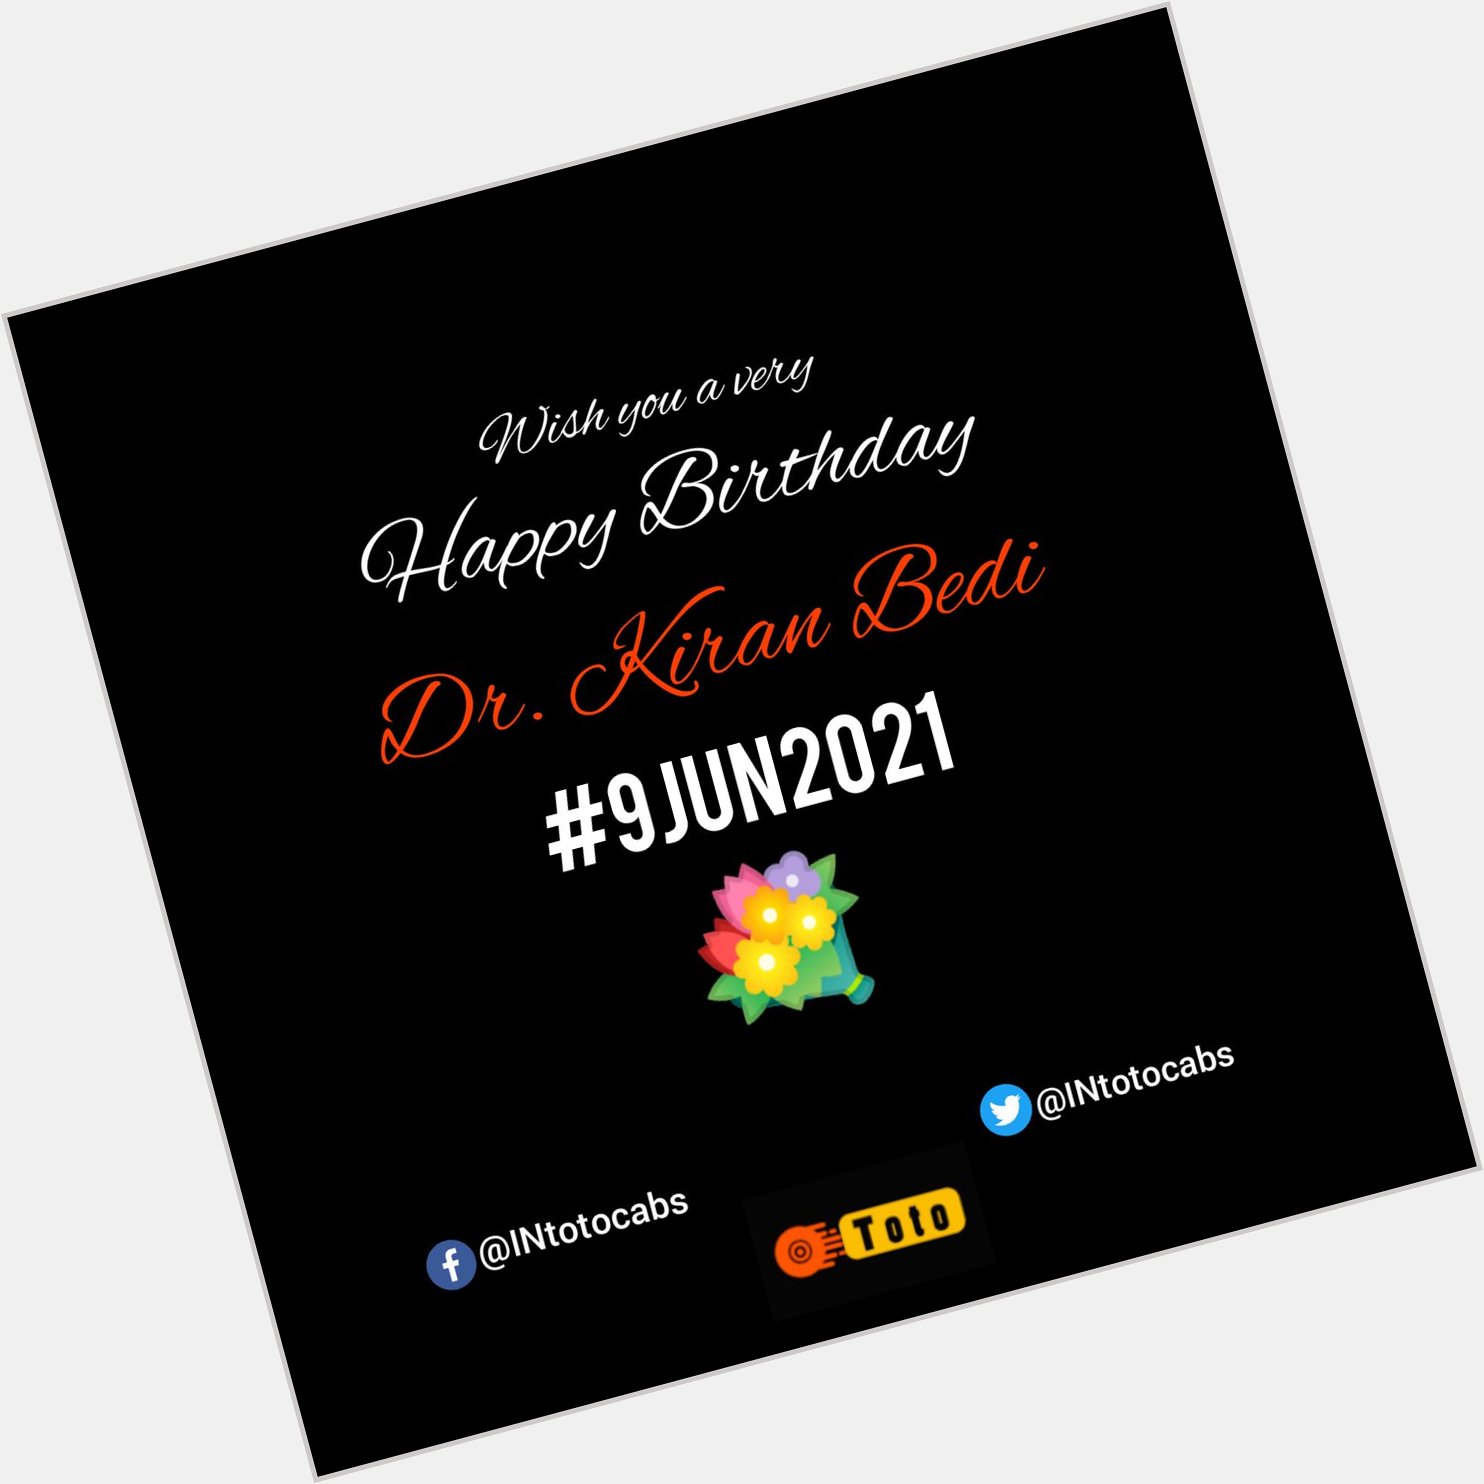 Wish you a very Happy Birthday!
Dr. Kiran Bedi    